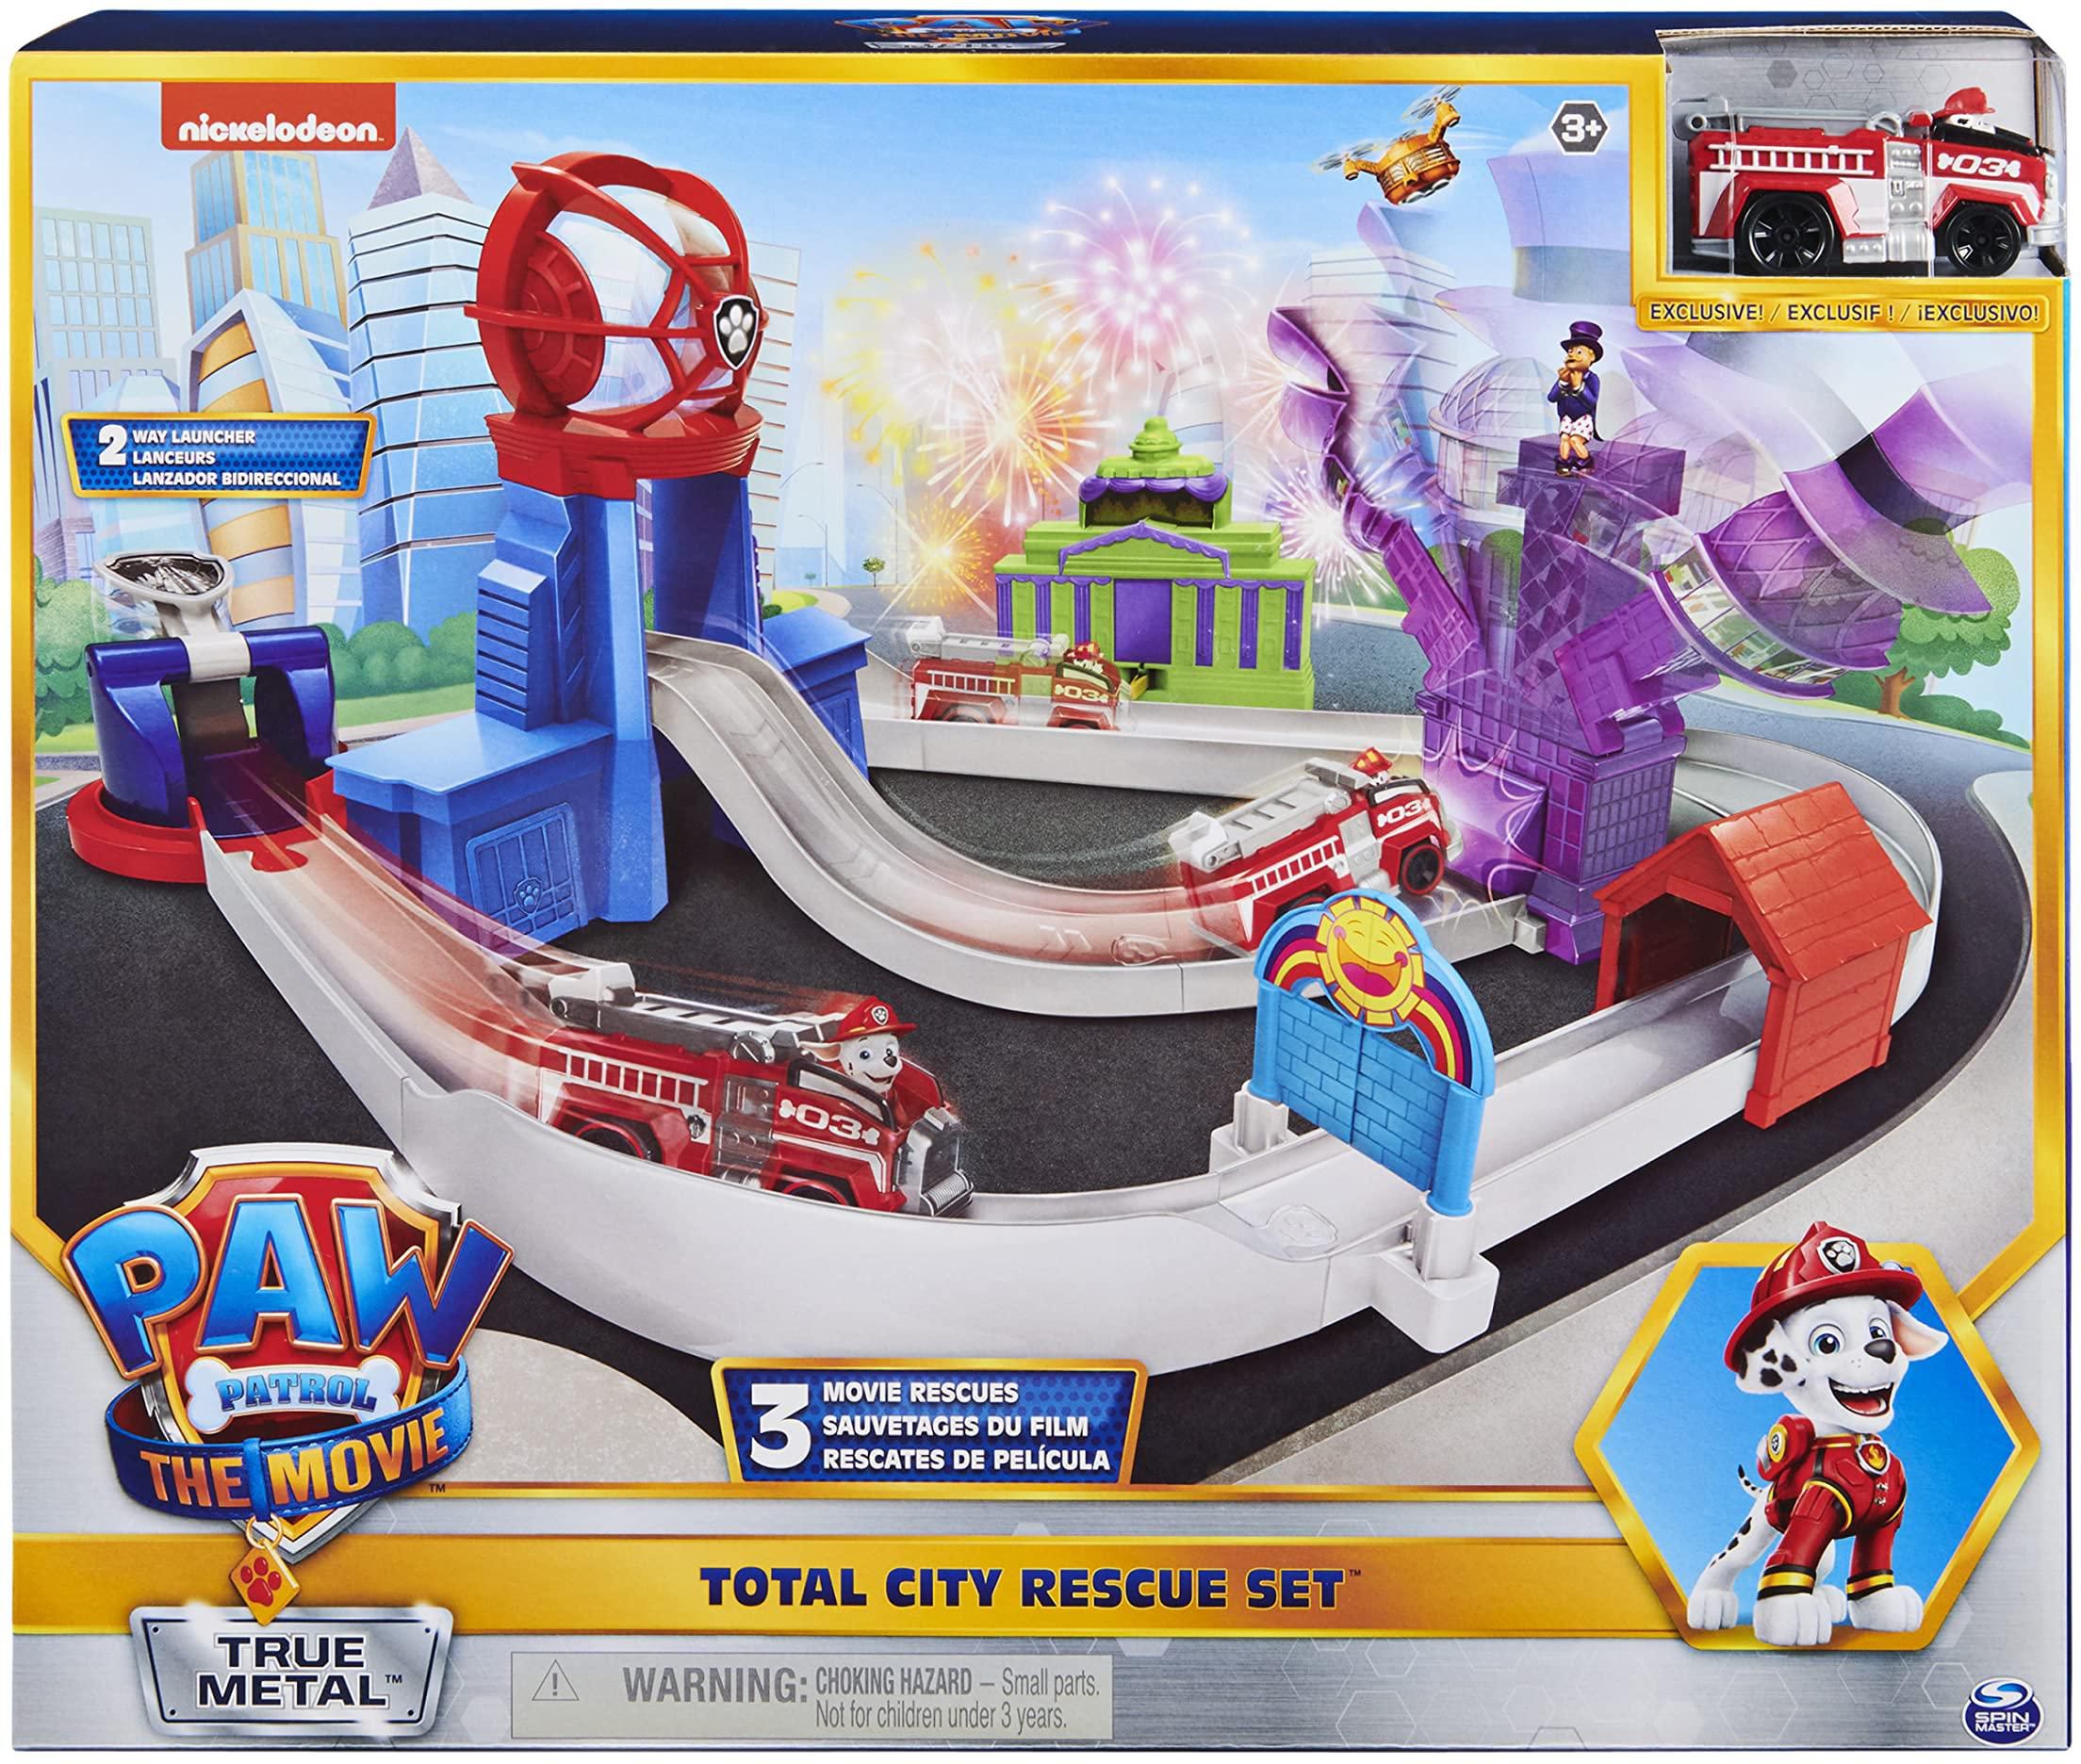 Total City Rescue Set